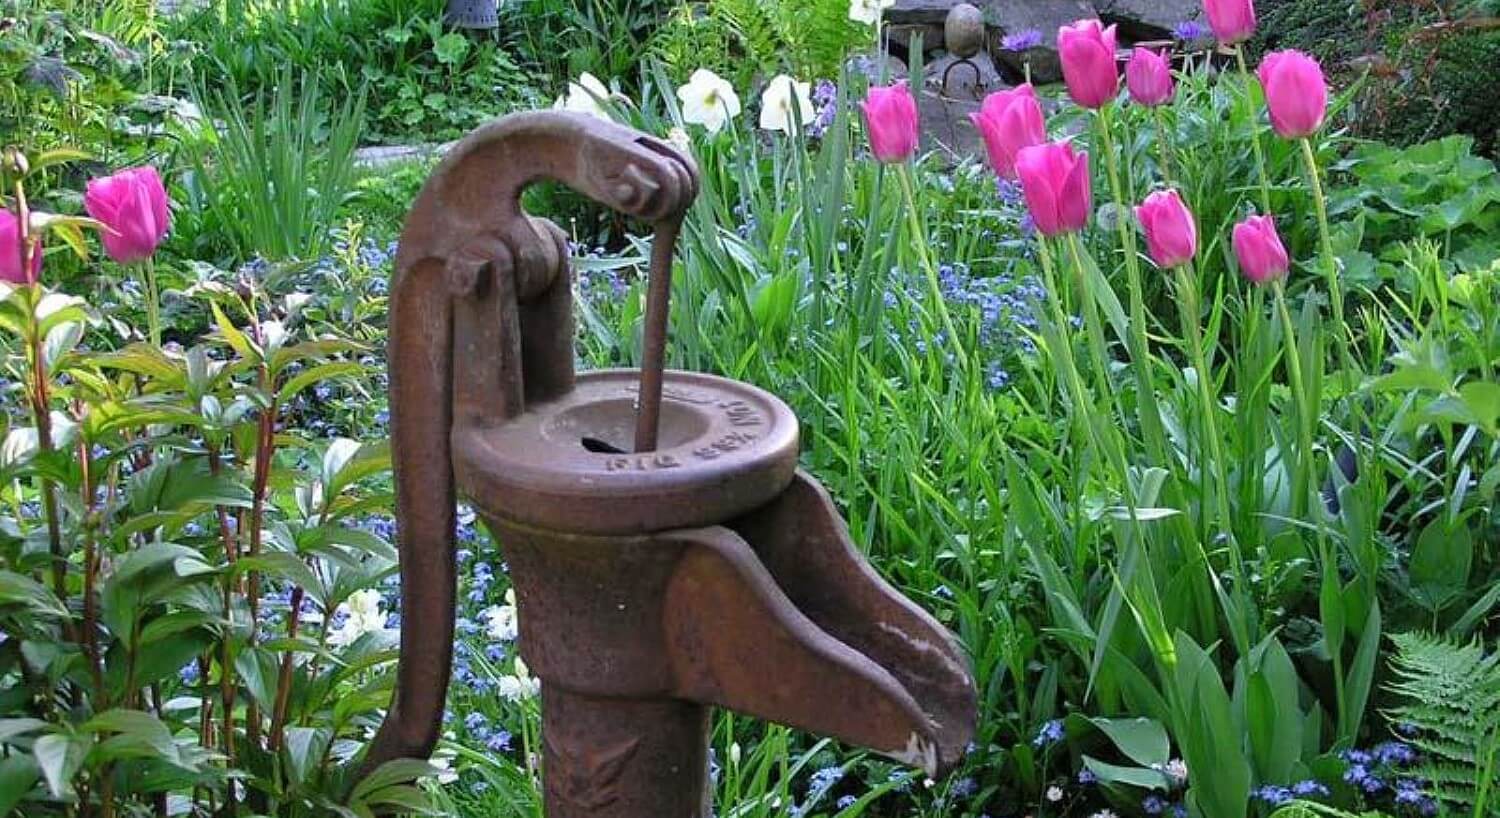 Old brown metal water pump in a garden of pink tulips